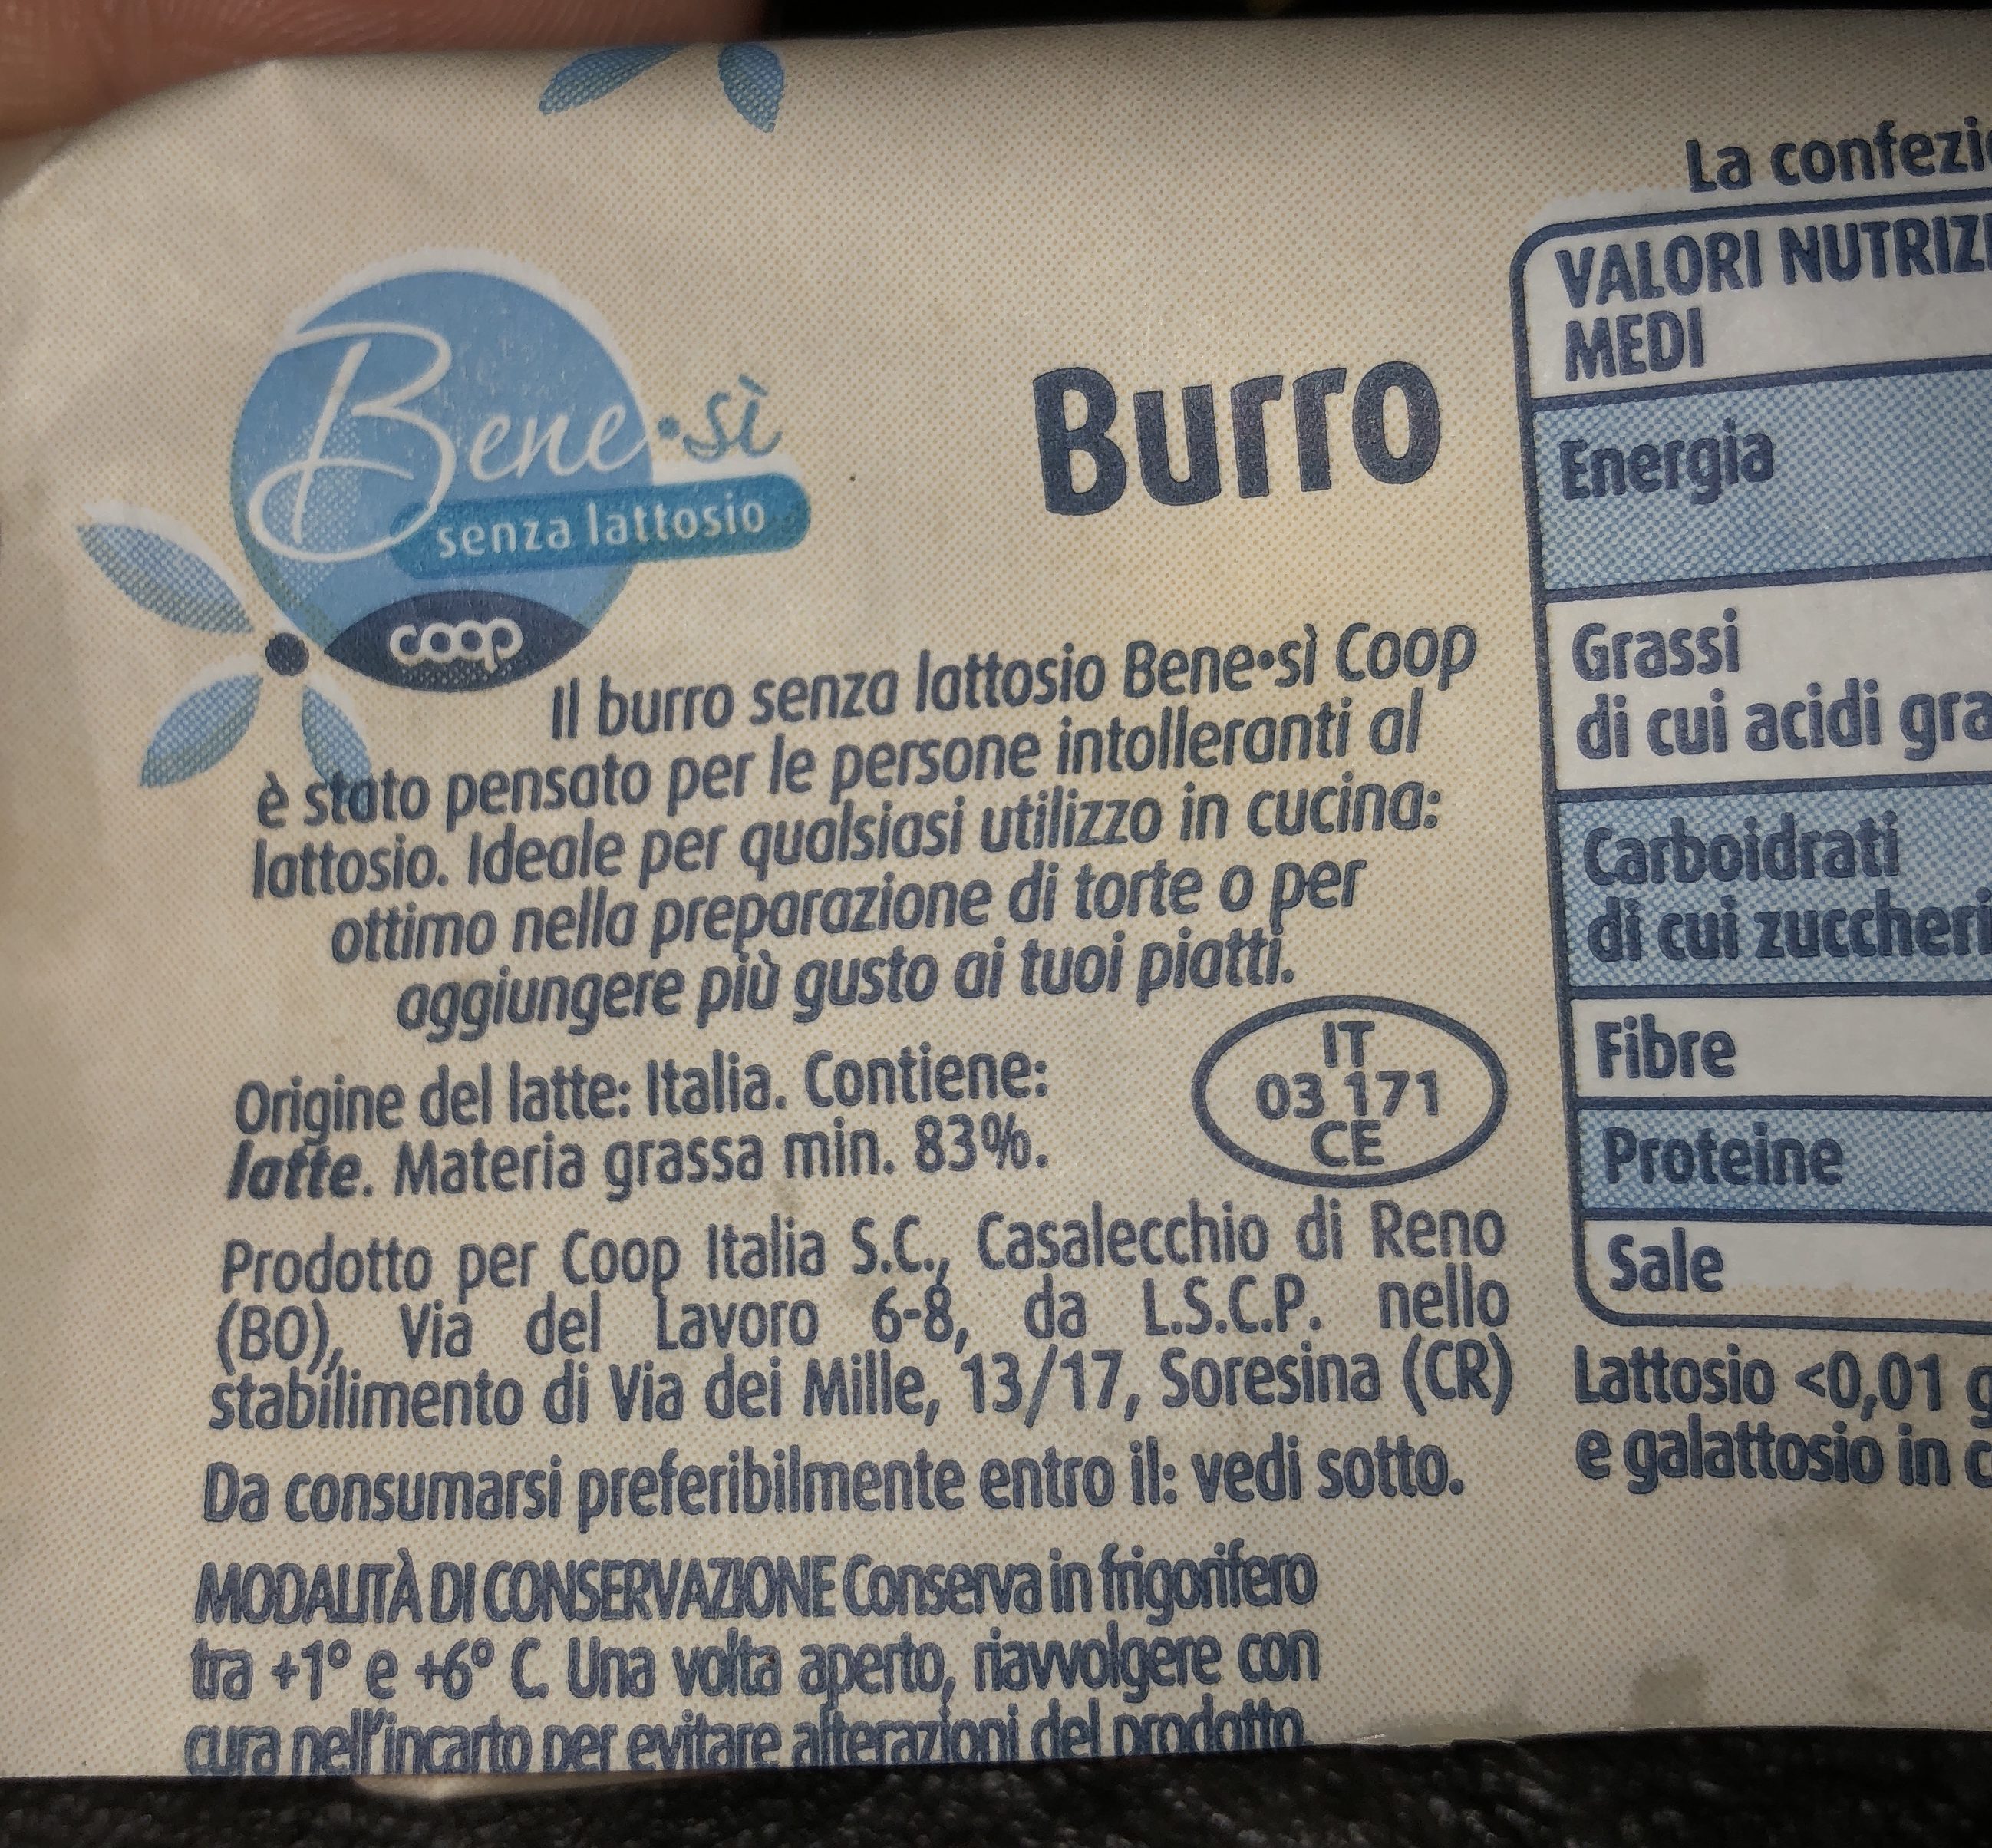 Burro senza lattosio - Ingredienti